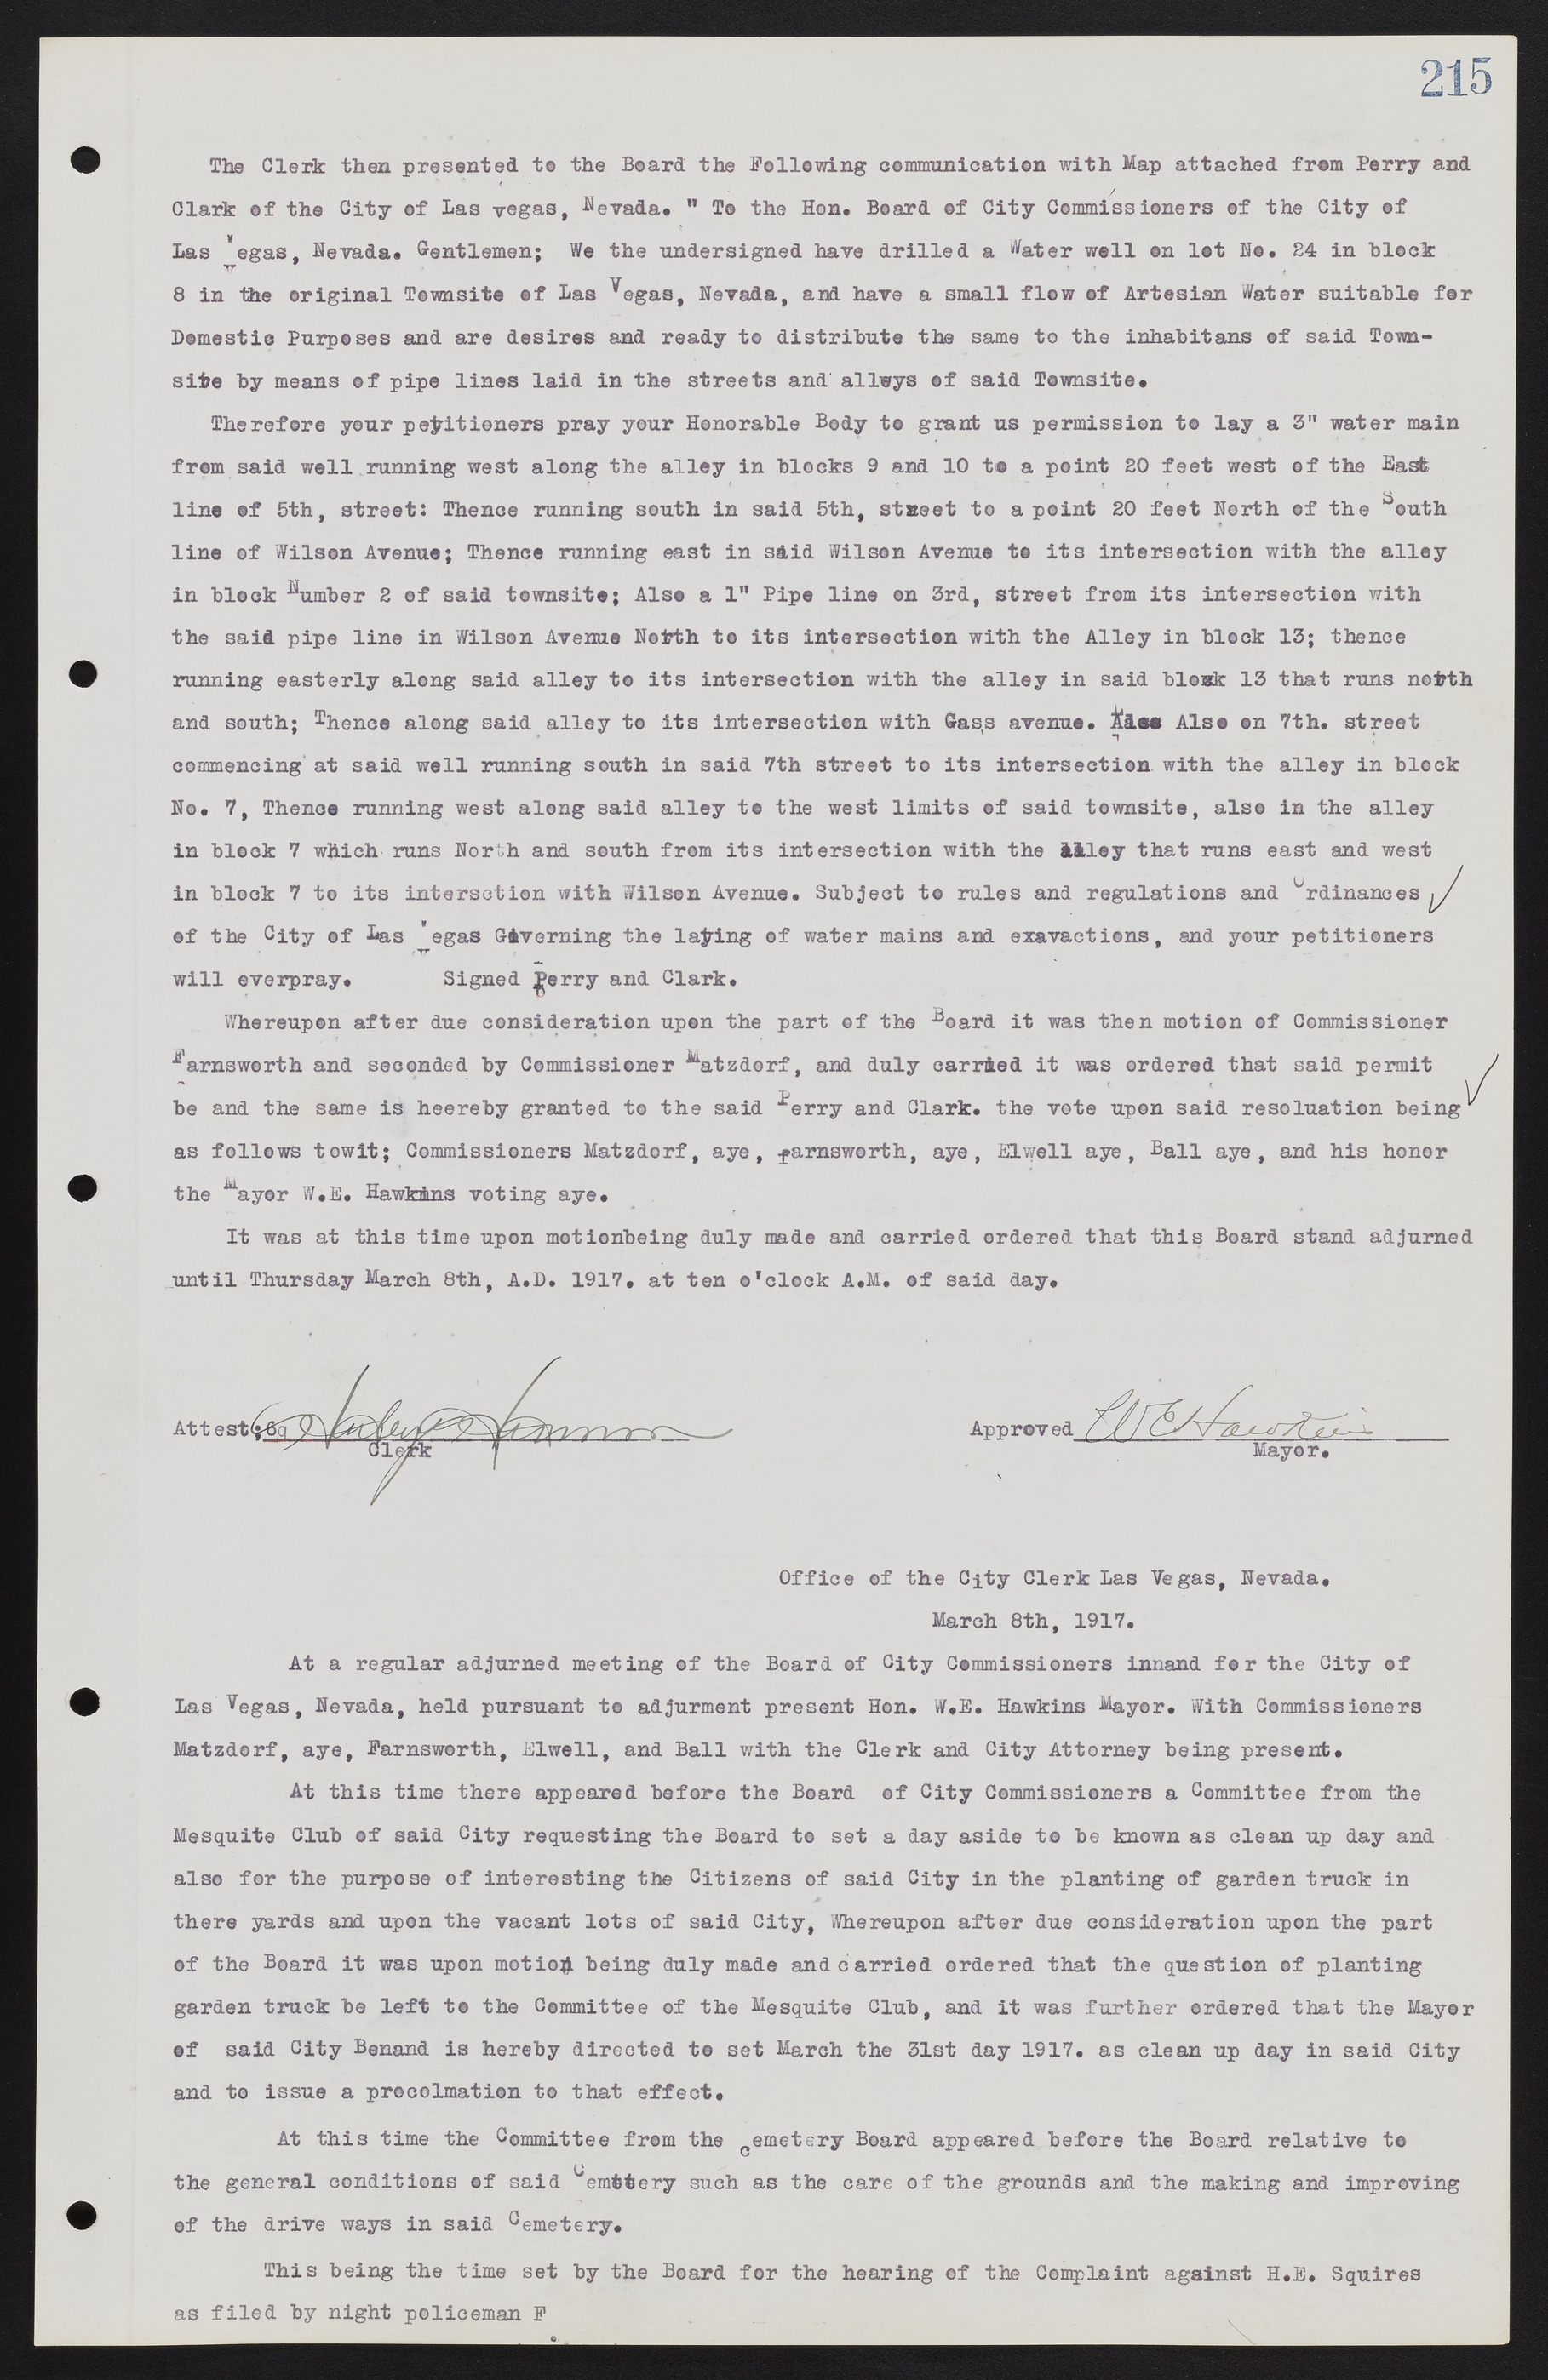 Las Vegas City Commission Minutes, June 22, 1911 to February 7, 1922, lvc000001-231